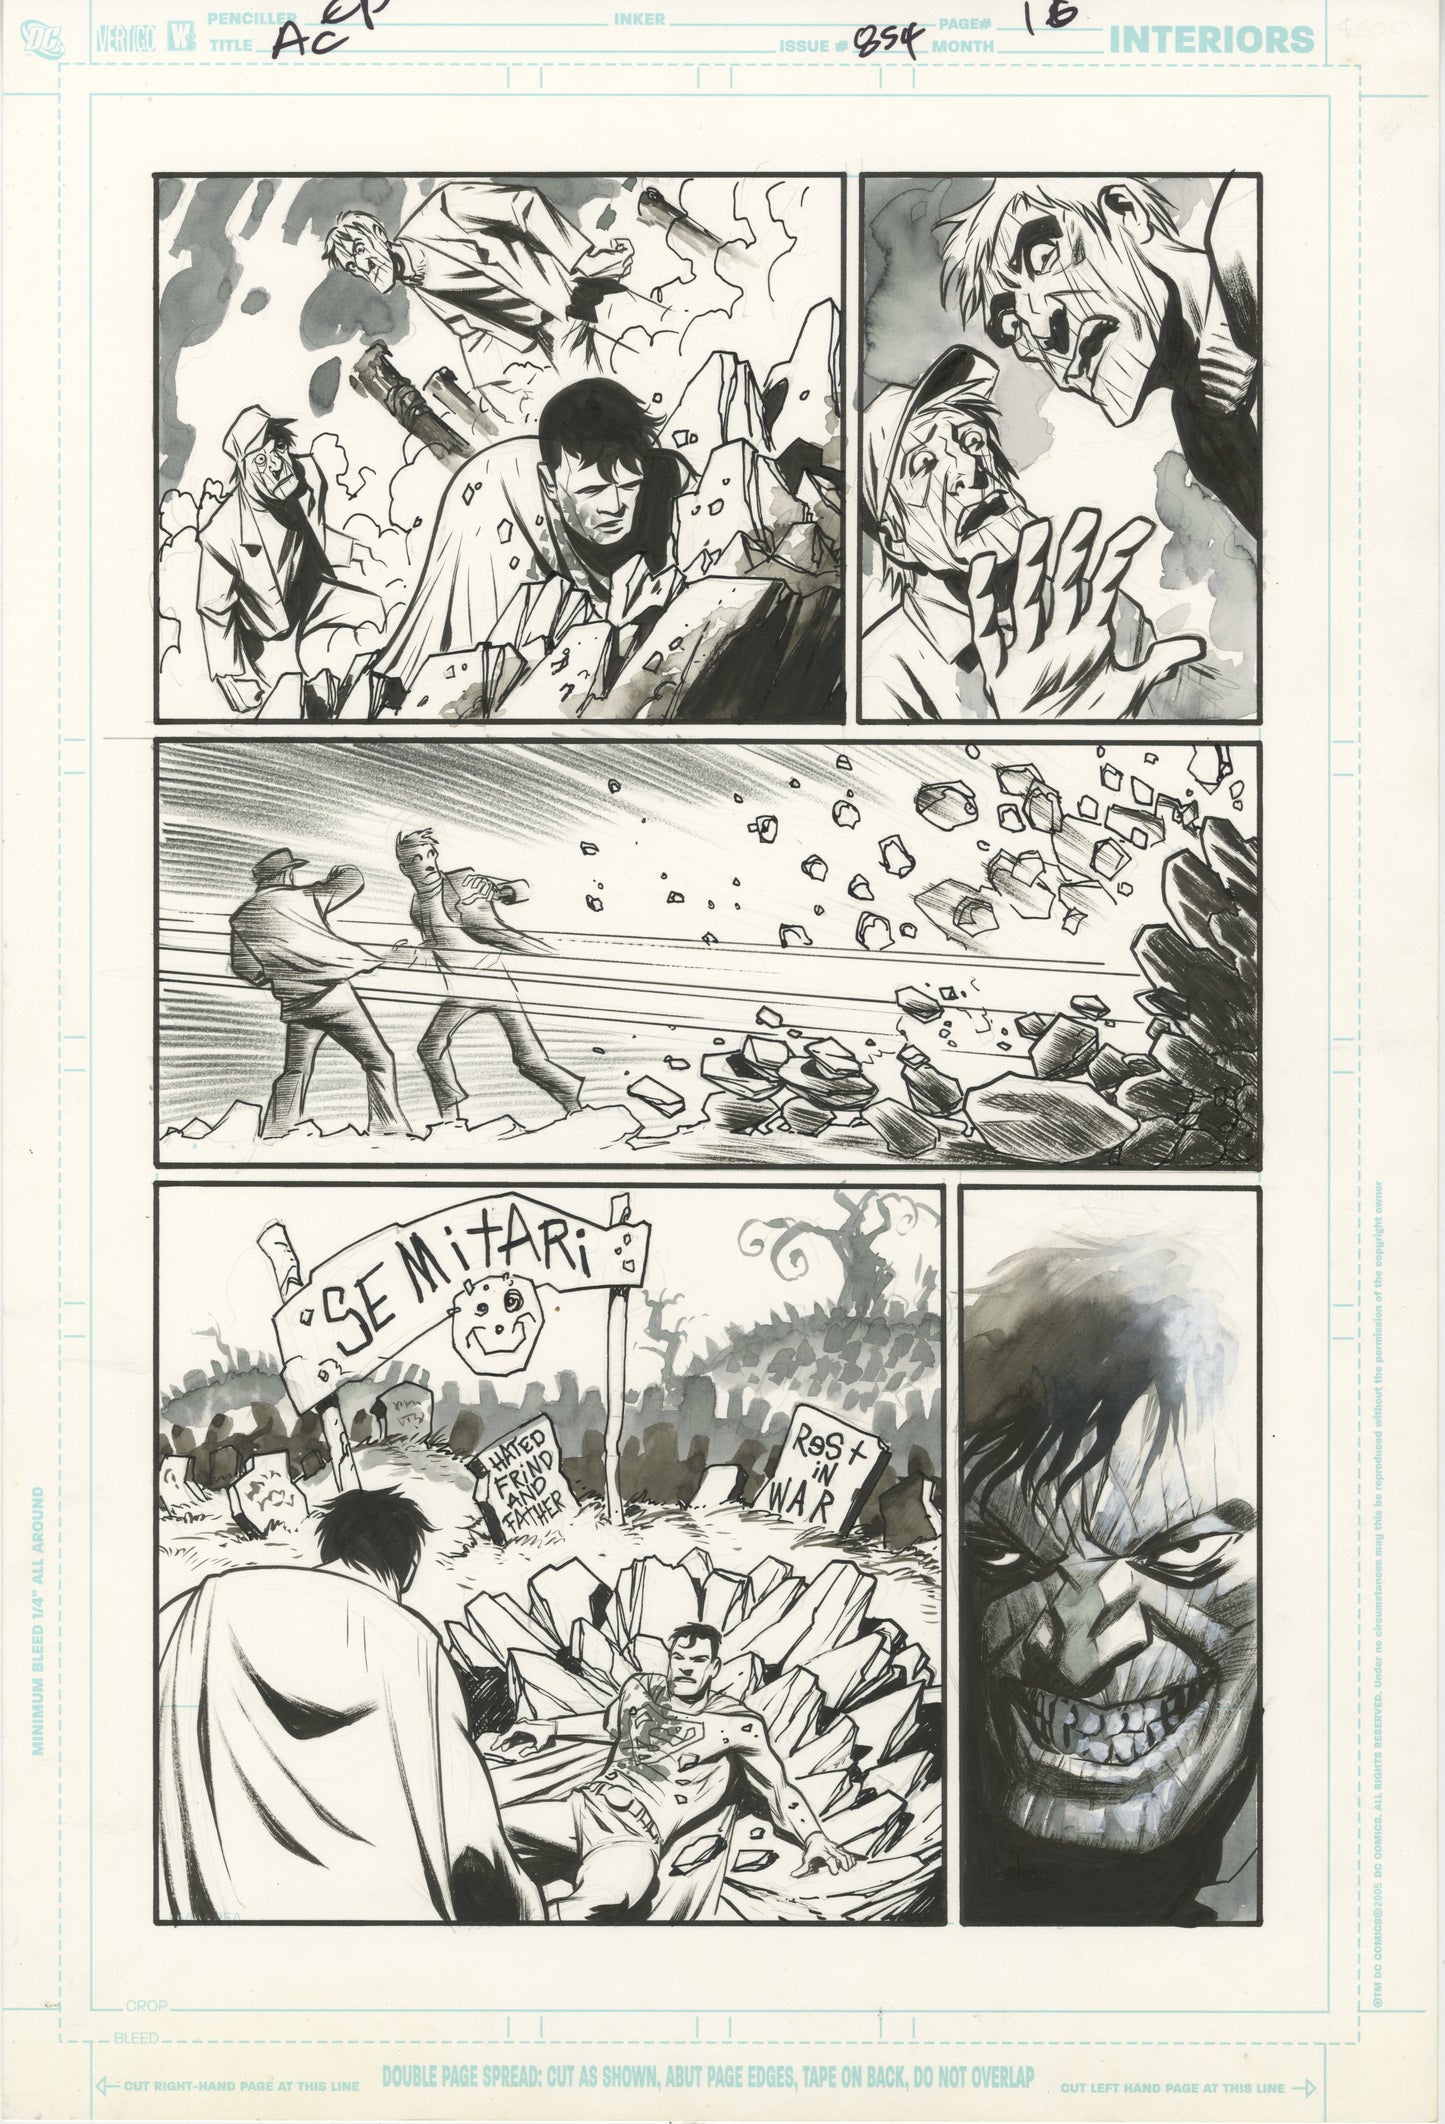 Action Comics #855, Page #16 (2007 DC, Superman: Escape From Bizarro World)